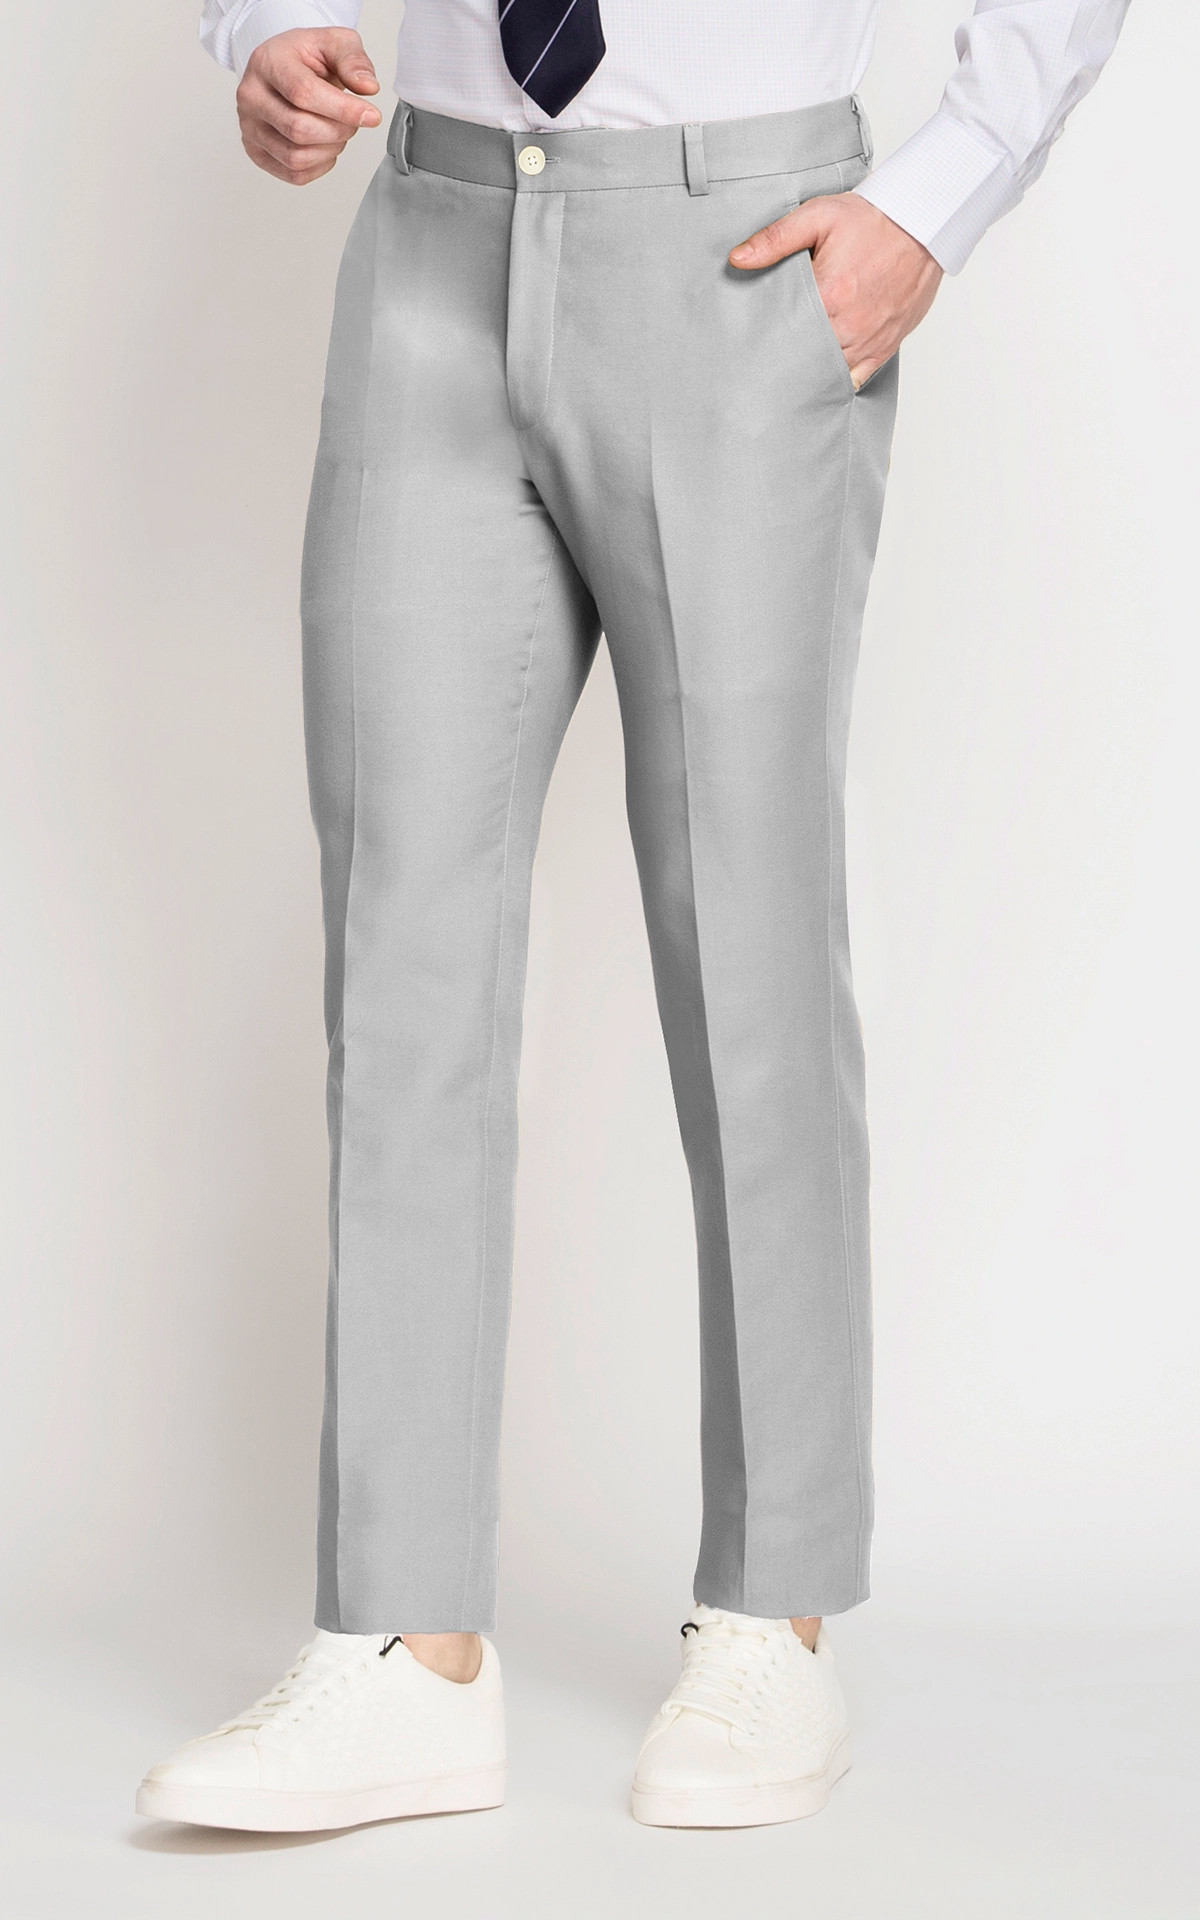 Slate Grey Cotton Pants - Hangrr